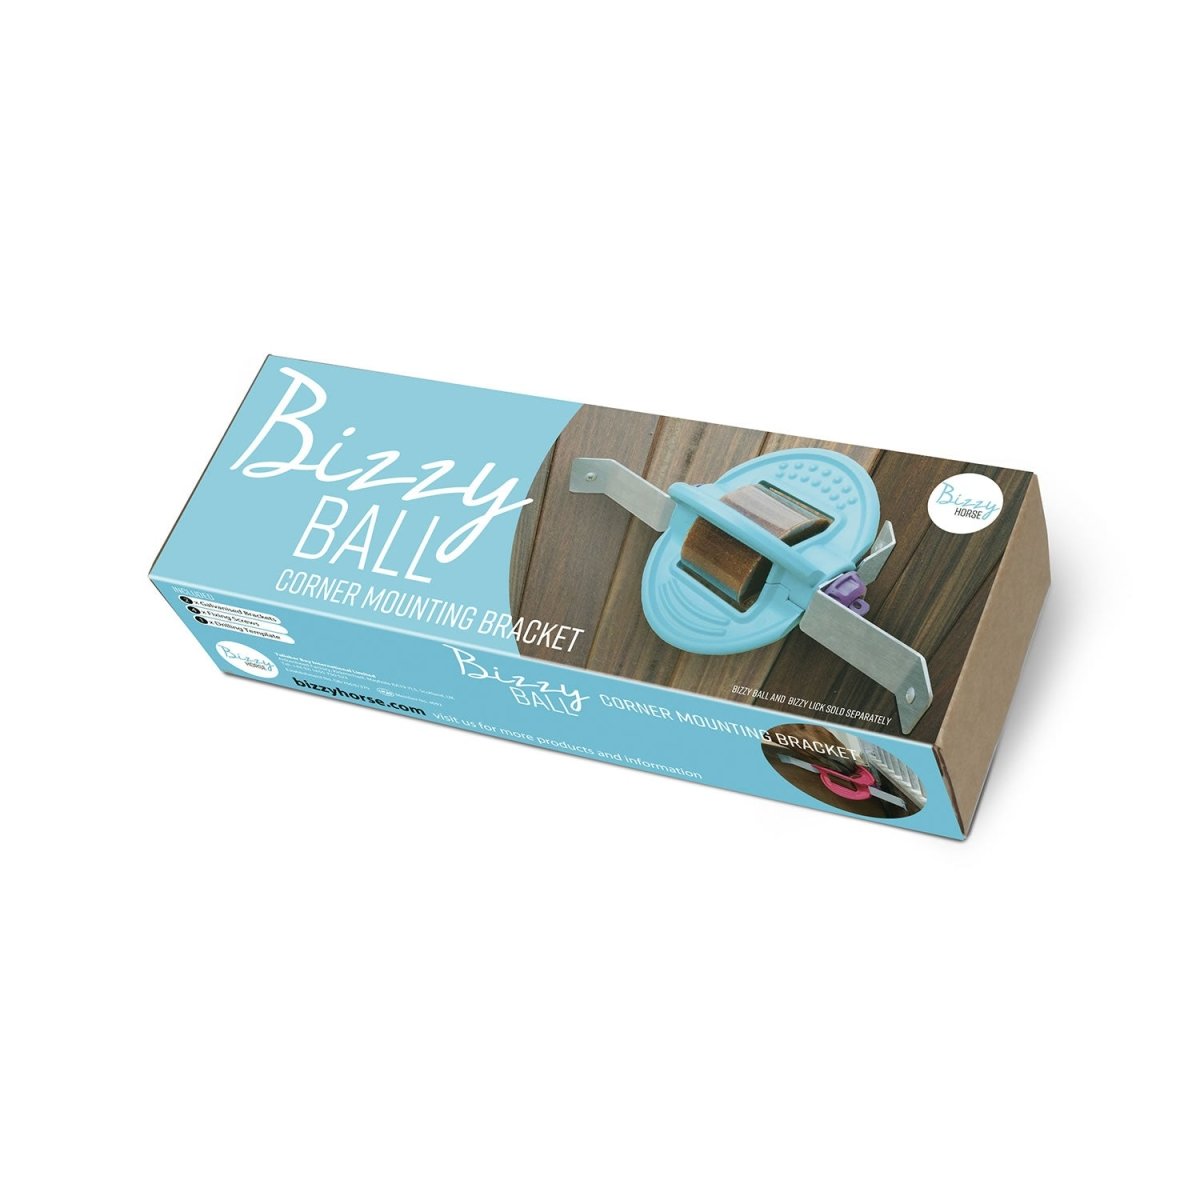 Bizzy Horse Bizzy Ball Corner Mounting Bracket - -